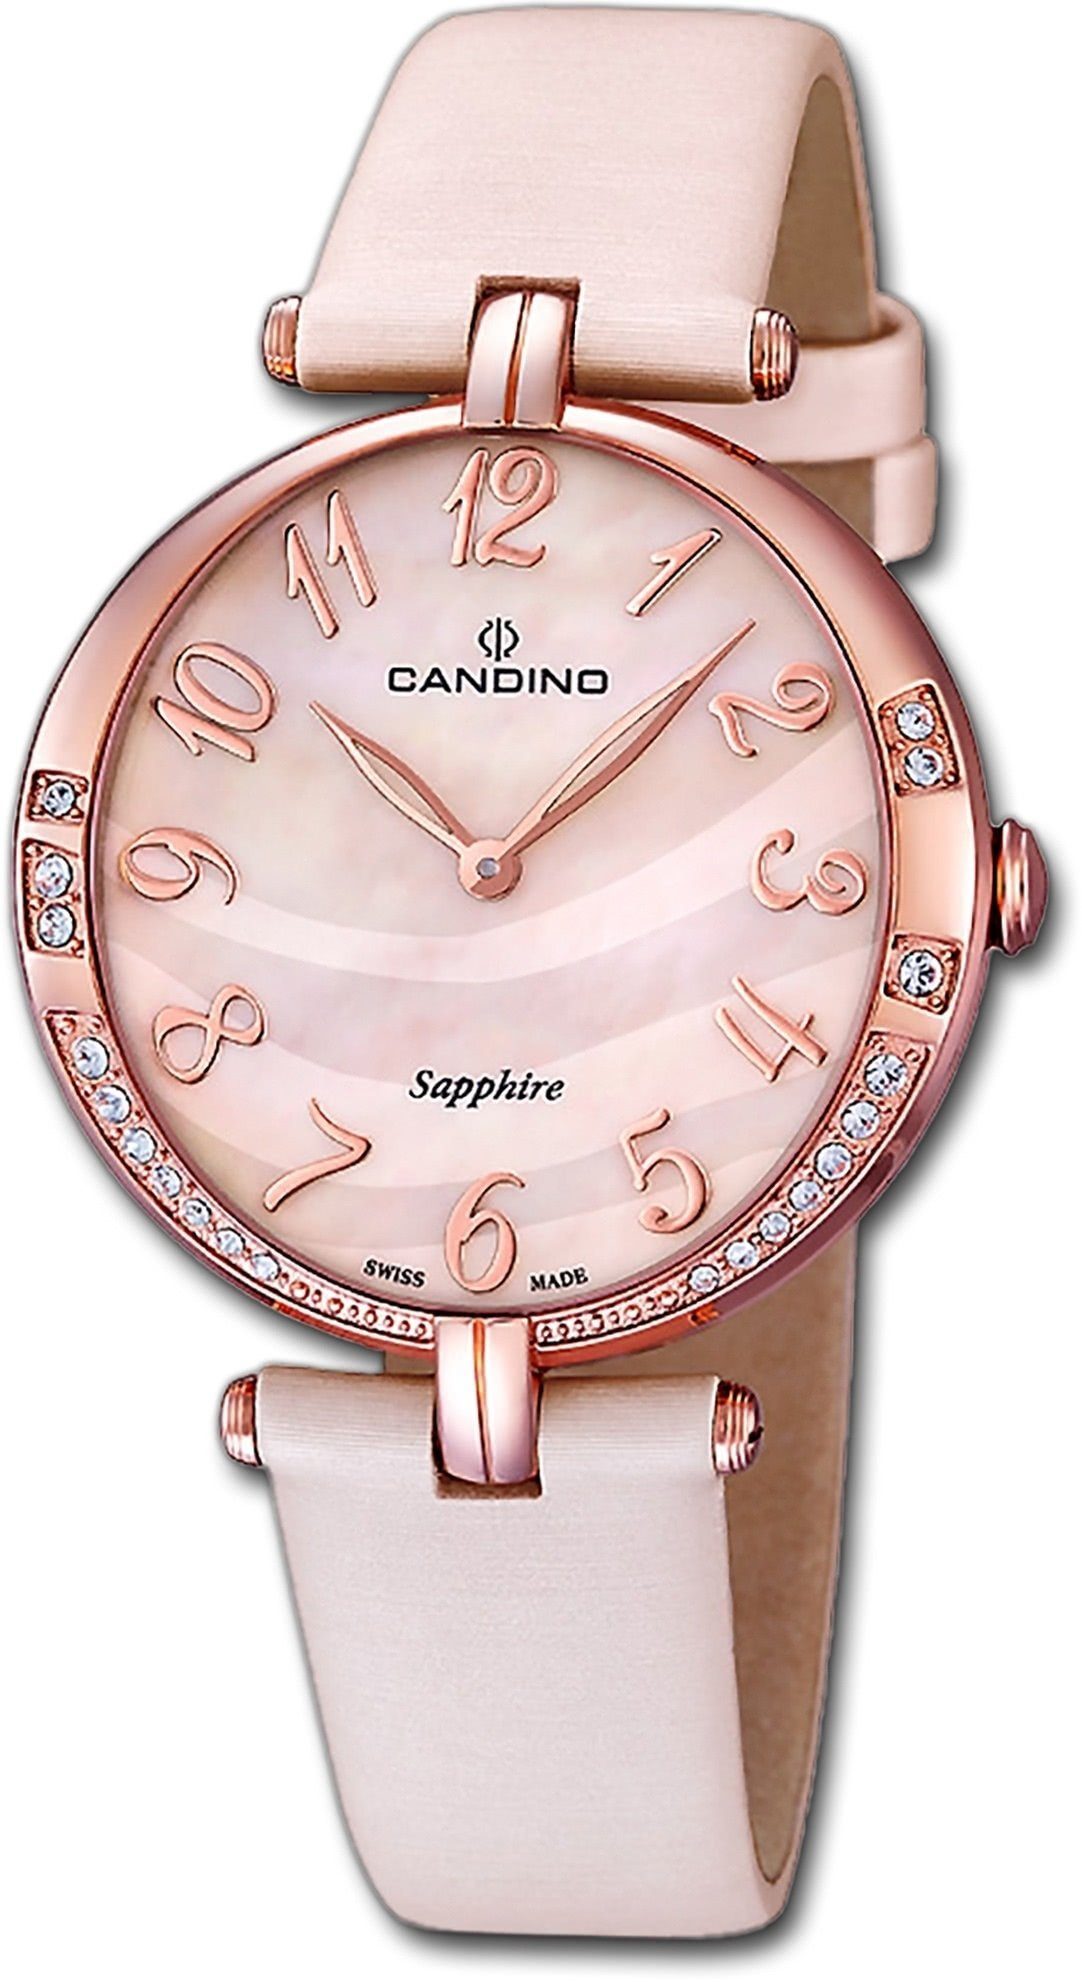 Elegance Candino C4602/3, rosa rund, Damen Quarzuhr Edelstahlarmband Damenuhr Candino Armbanduhr